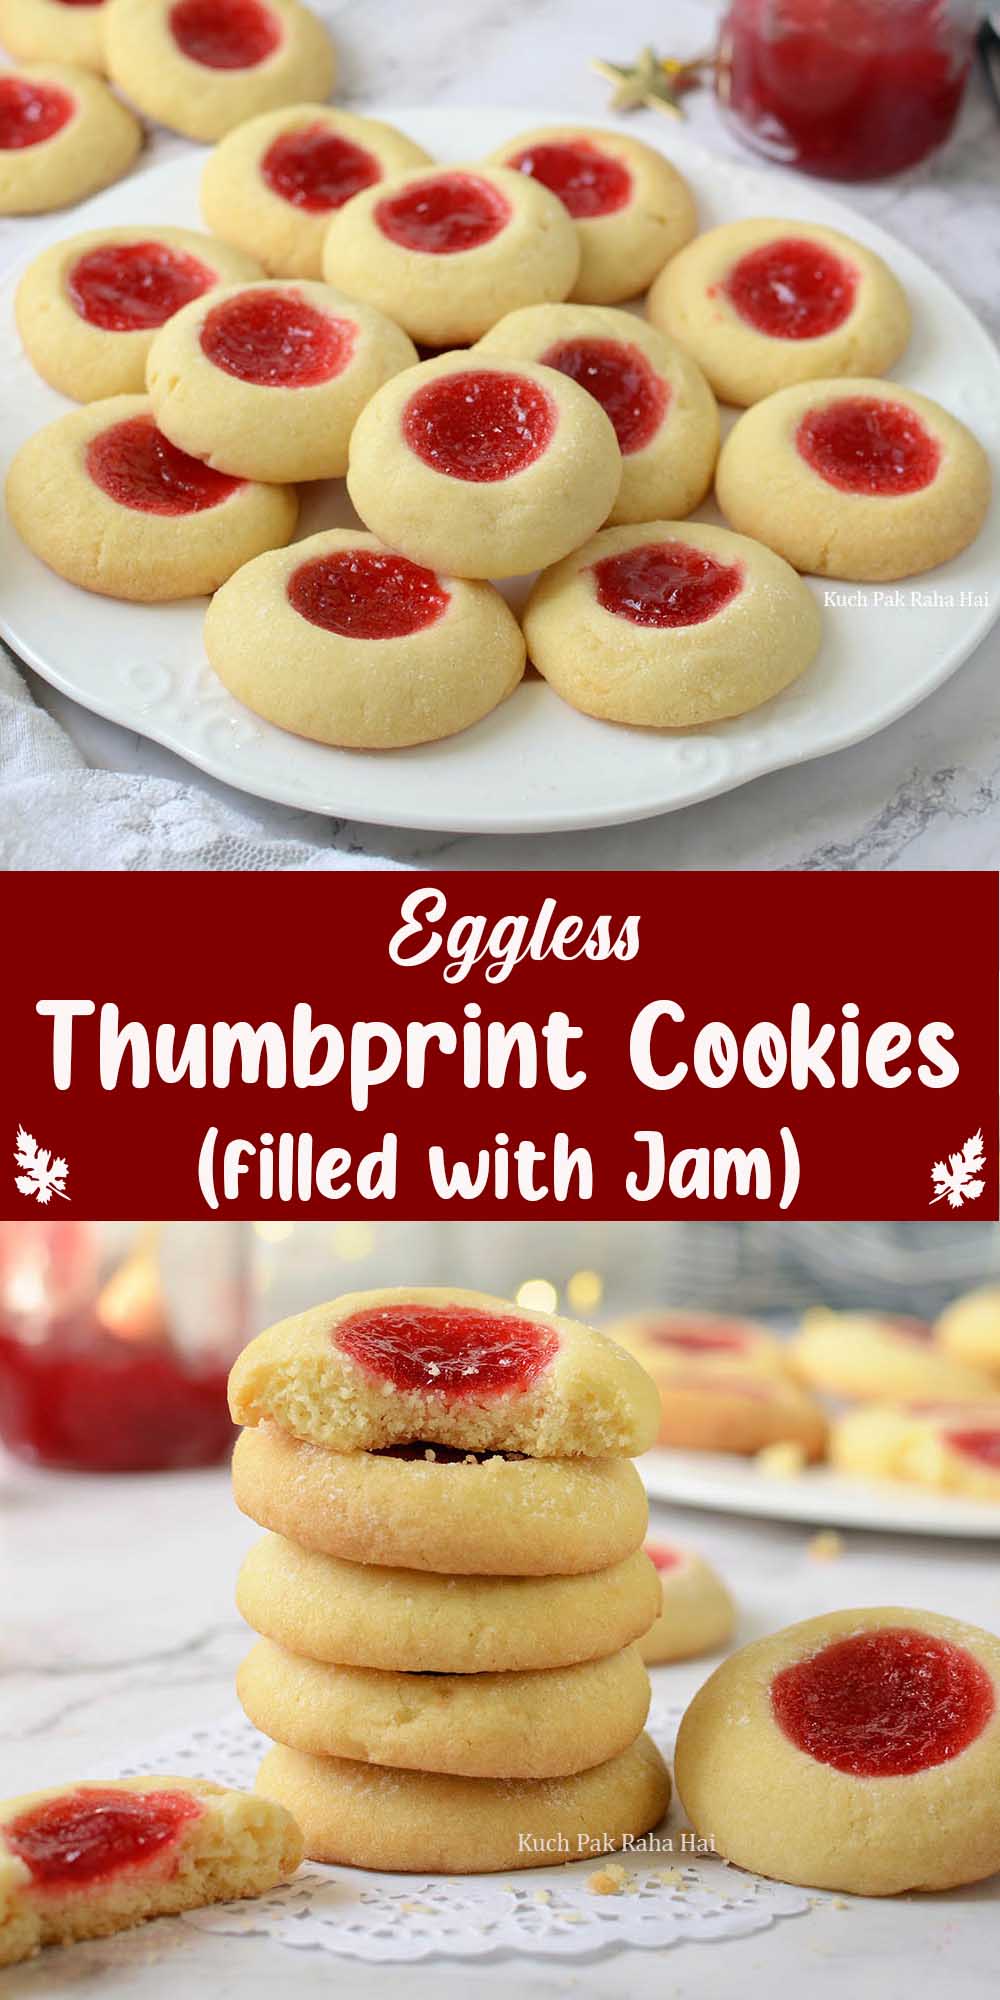 Eggless Jam filled thumbprint cookies for Christmas.